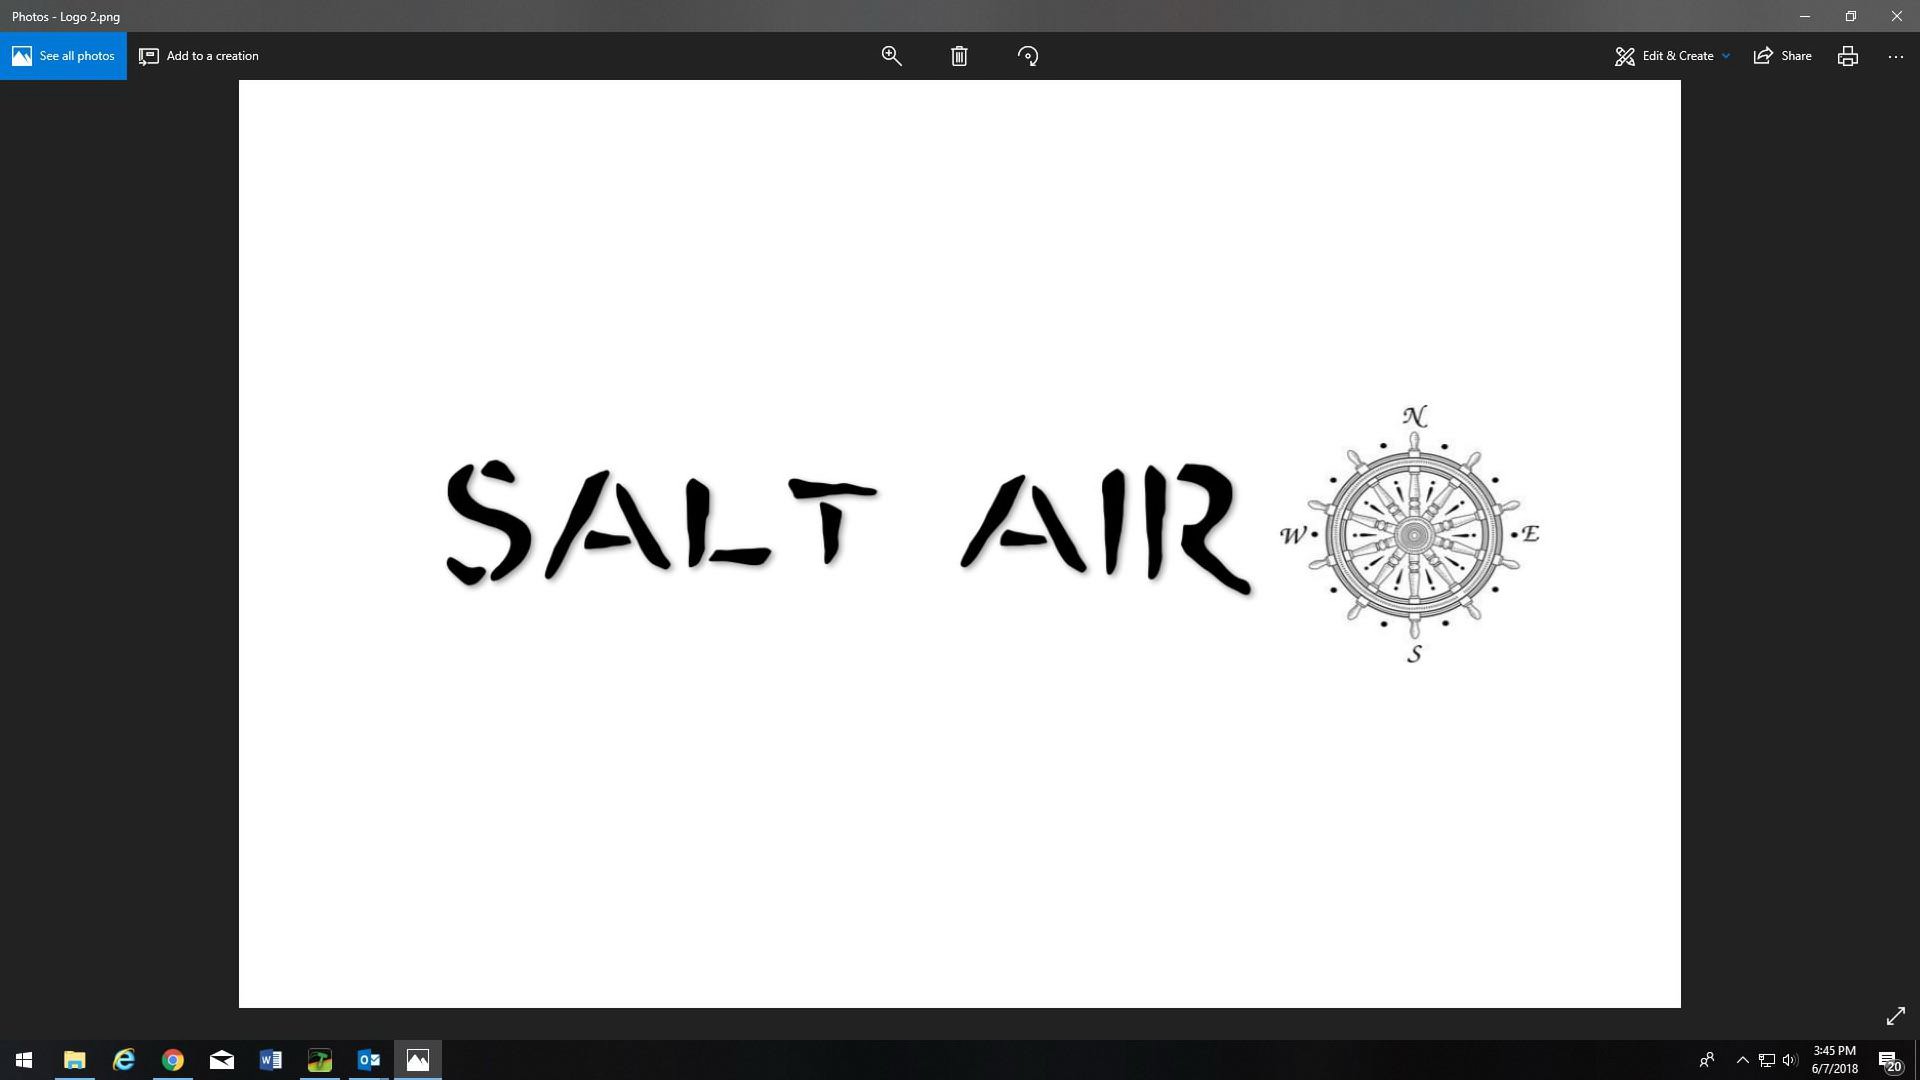 SALT AIR